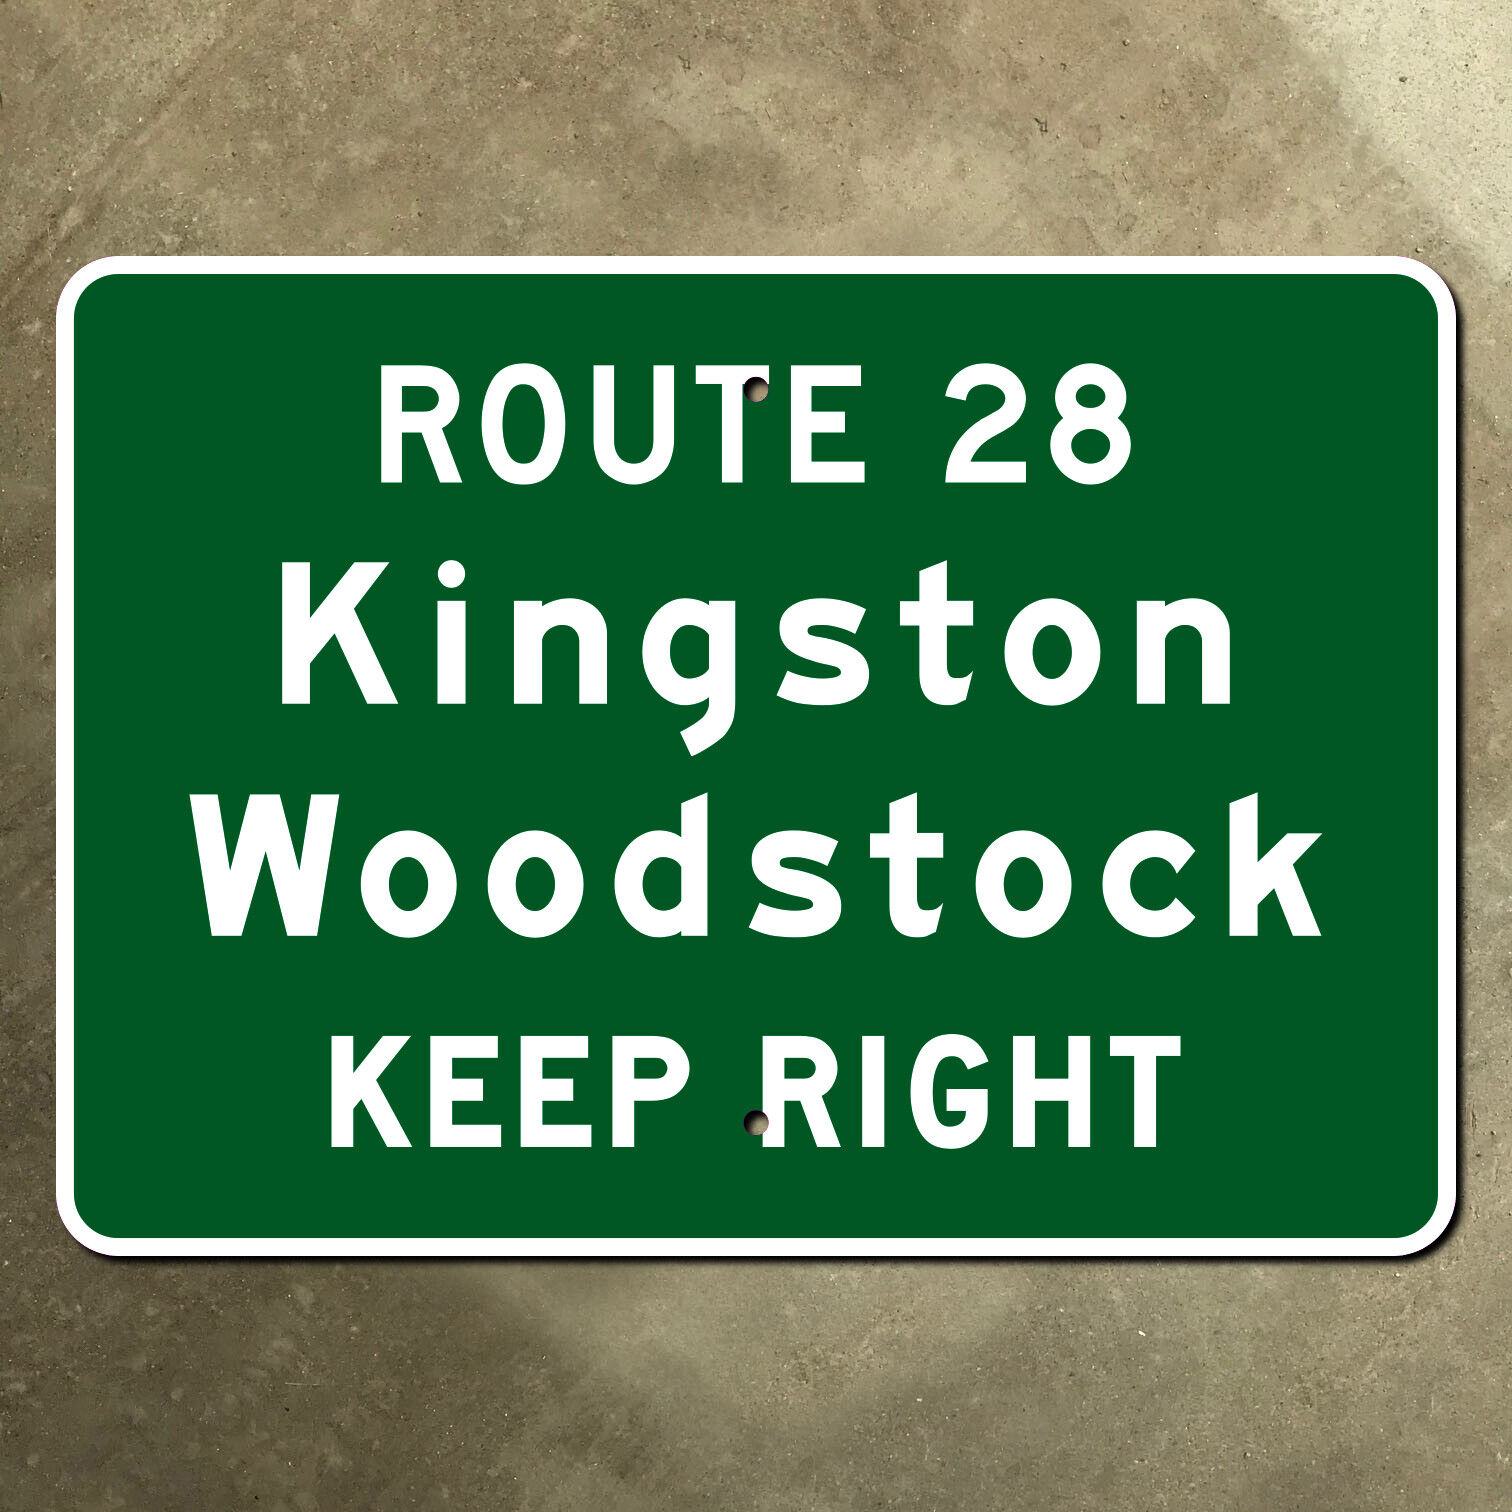 New York Thruway route 28 Woodstock highway guide sign 1962 concert 1969 14x10